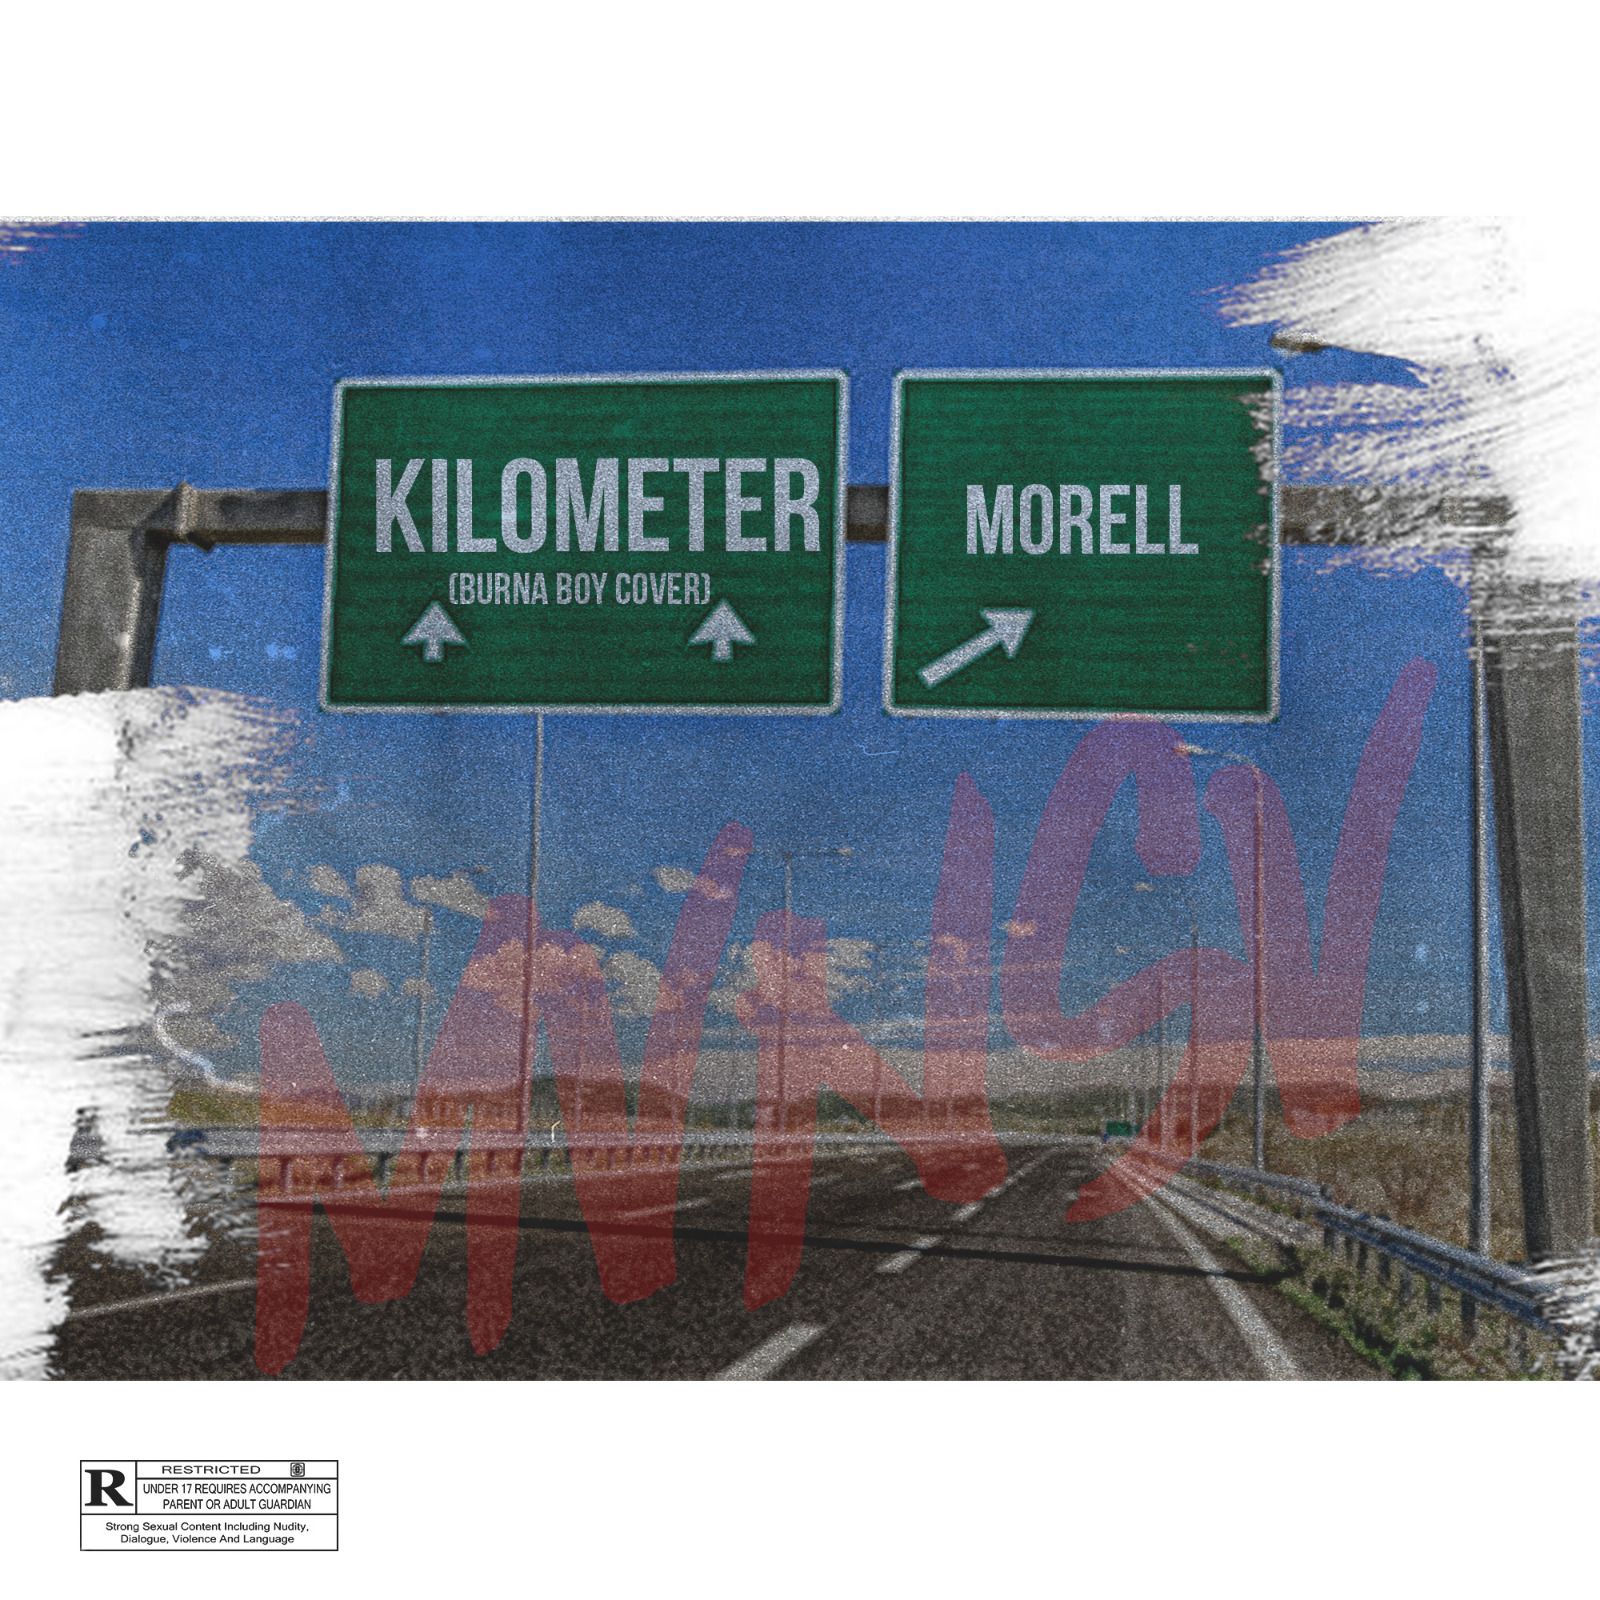 Morell – Kilometer (Burna Boy Cover)